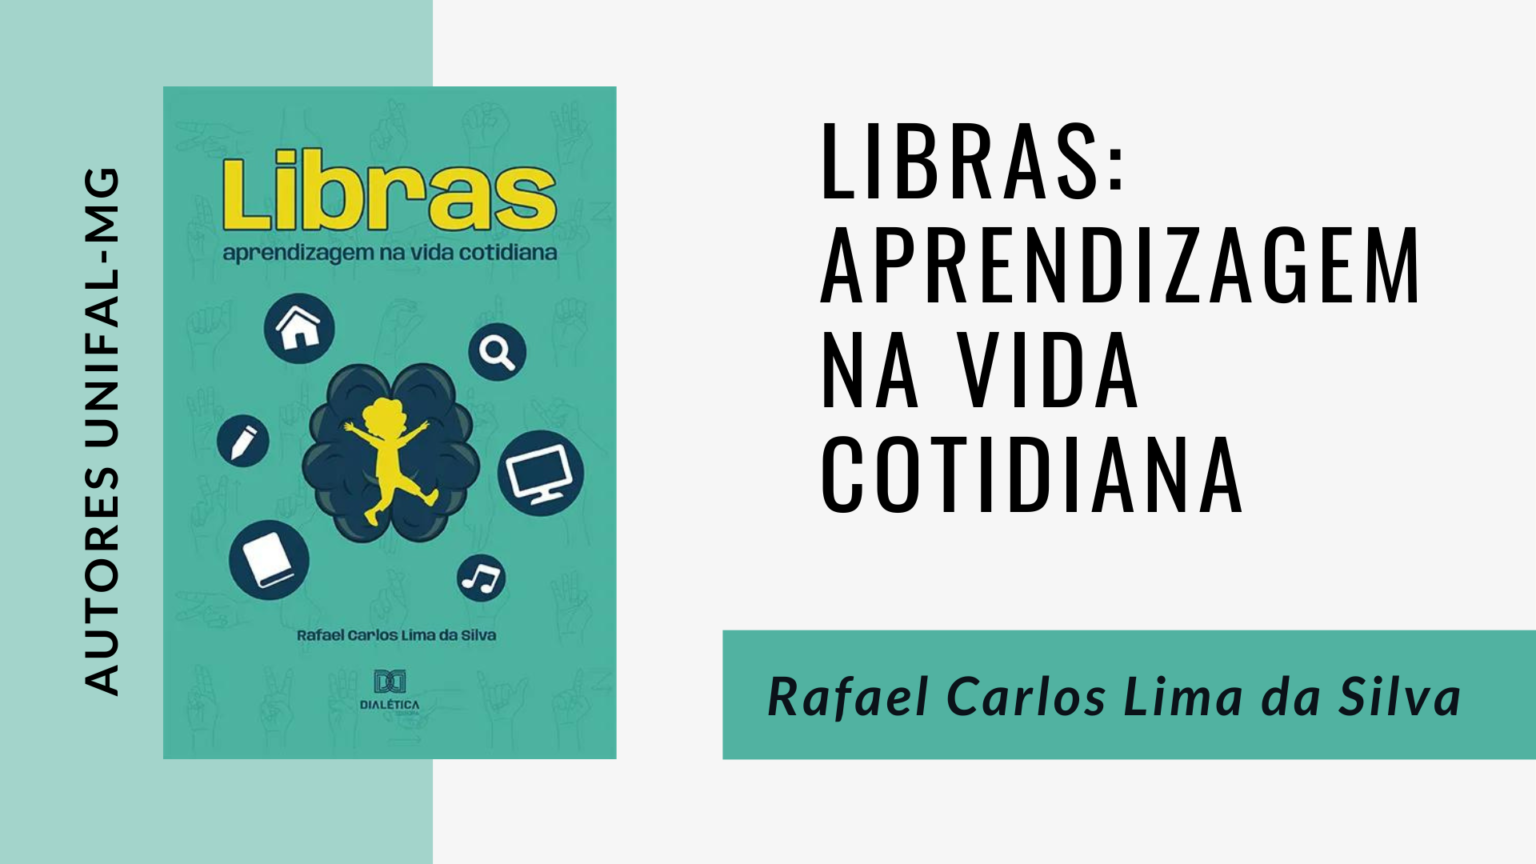 “Libras: aprendizagem na vida cotidiana” – Rafael Carlos Lima da Silva